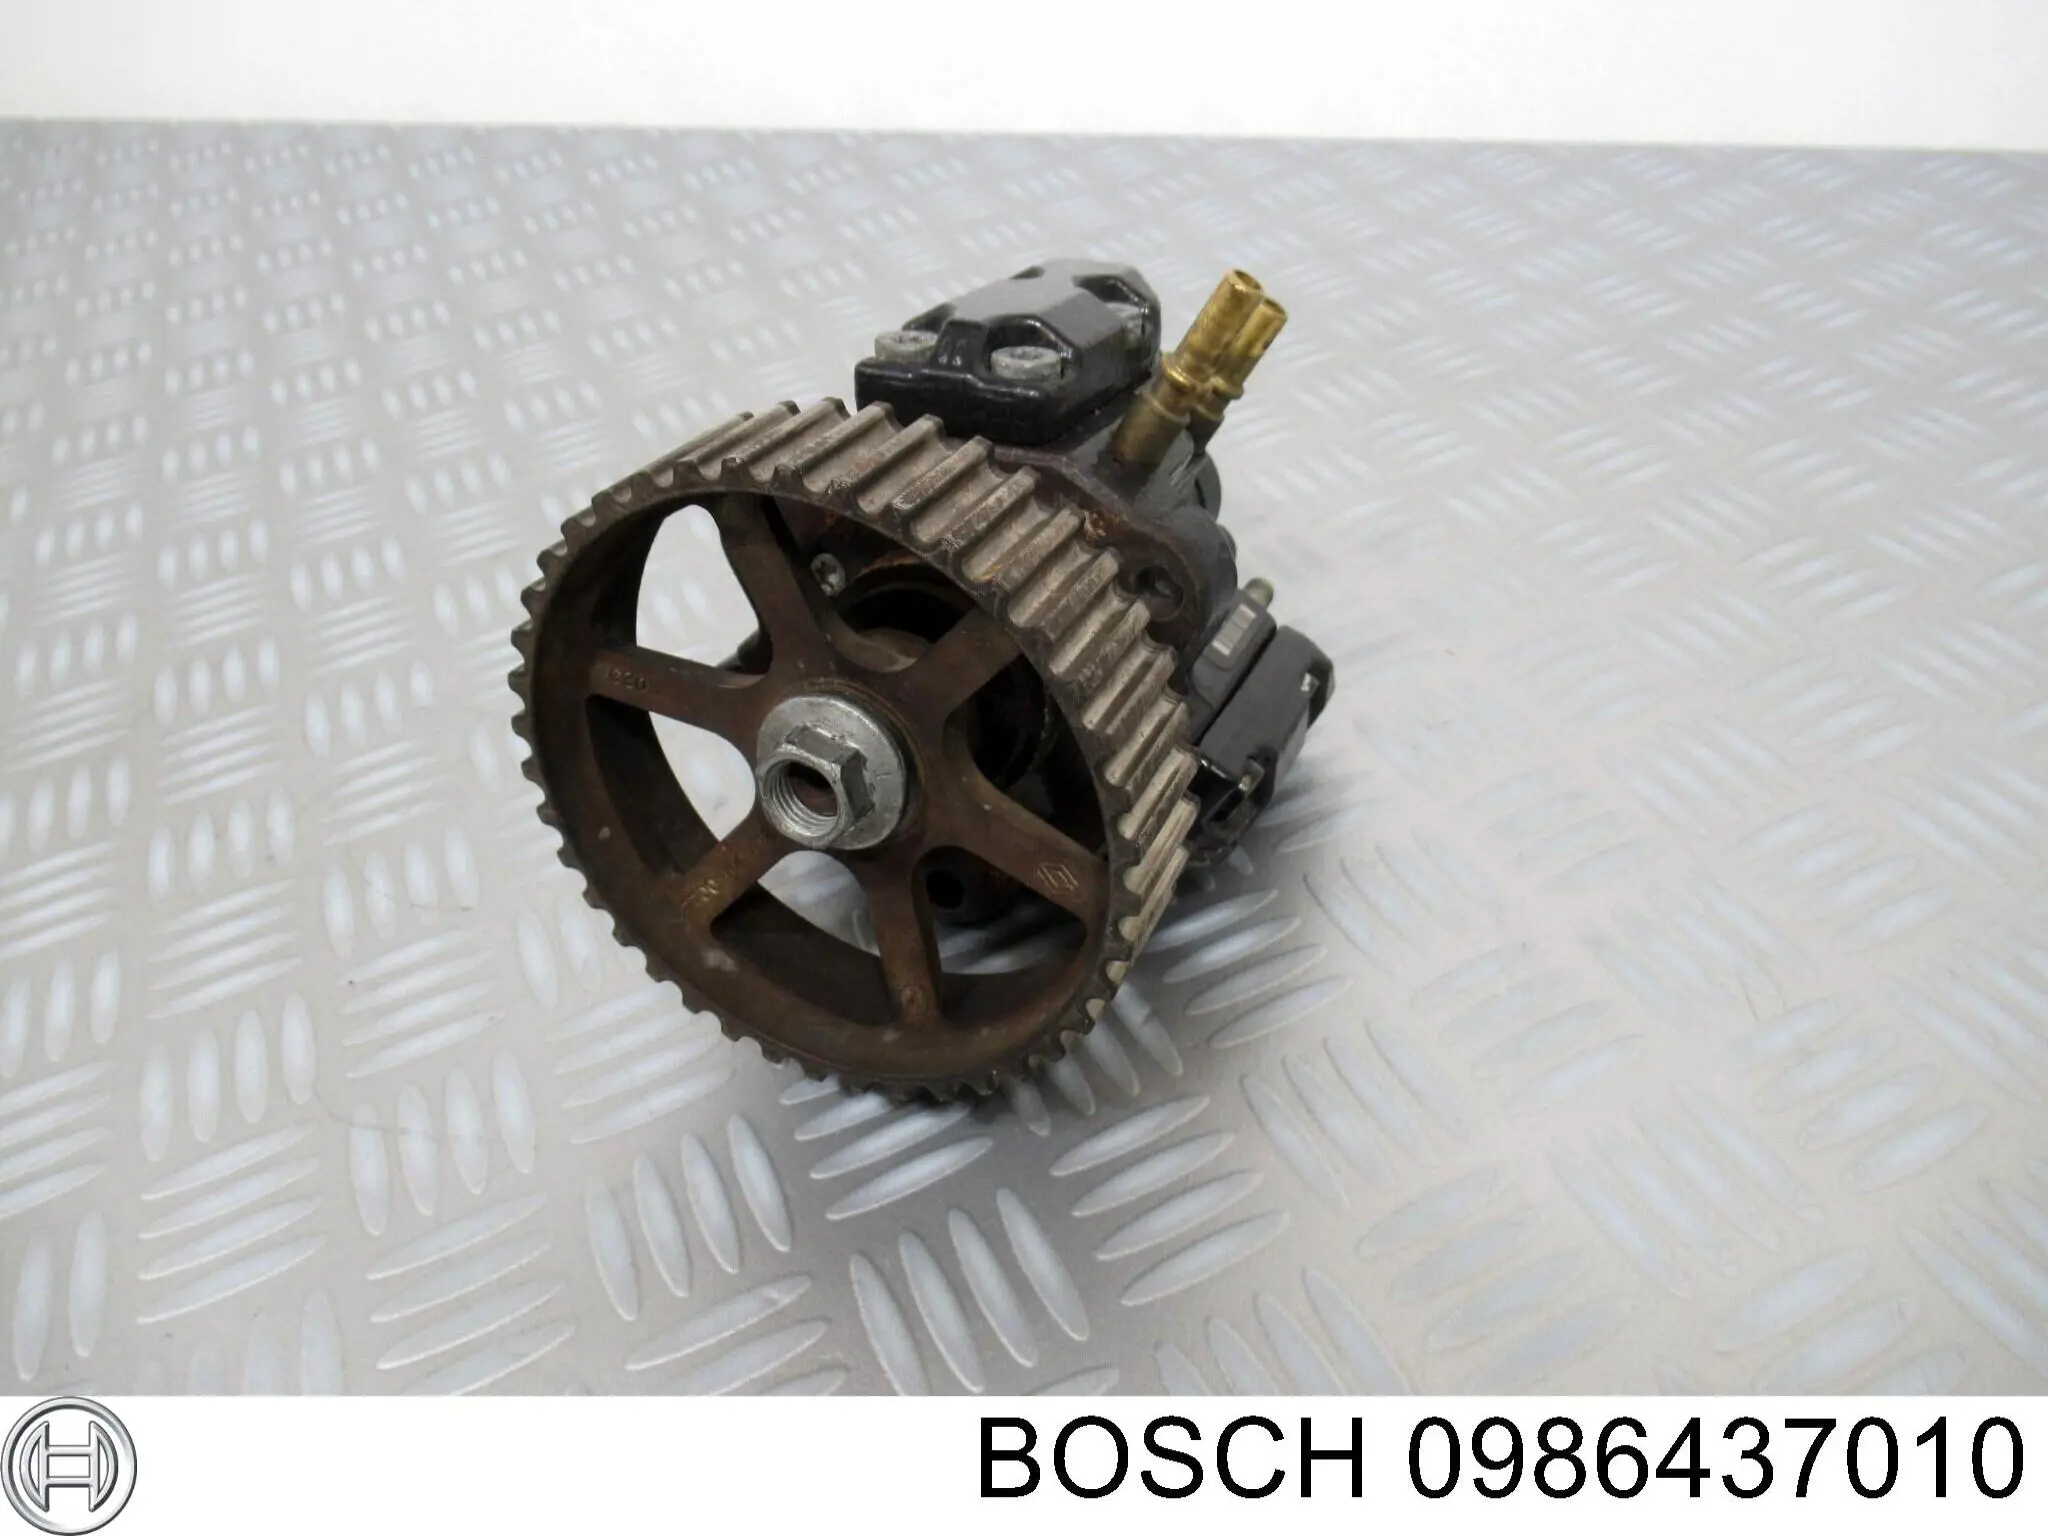 0986437010 Bosch bomba inyectora